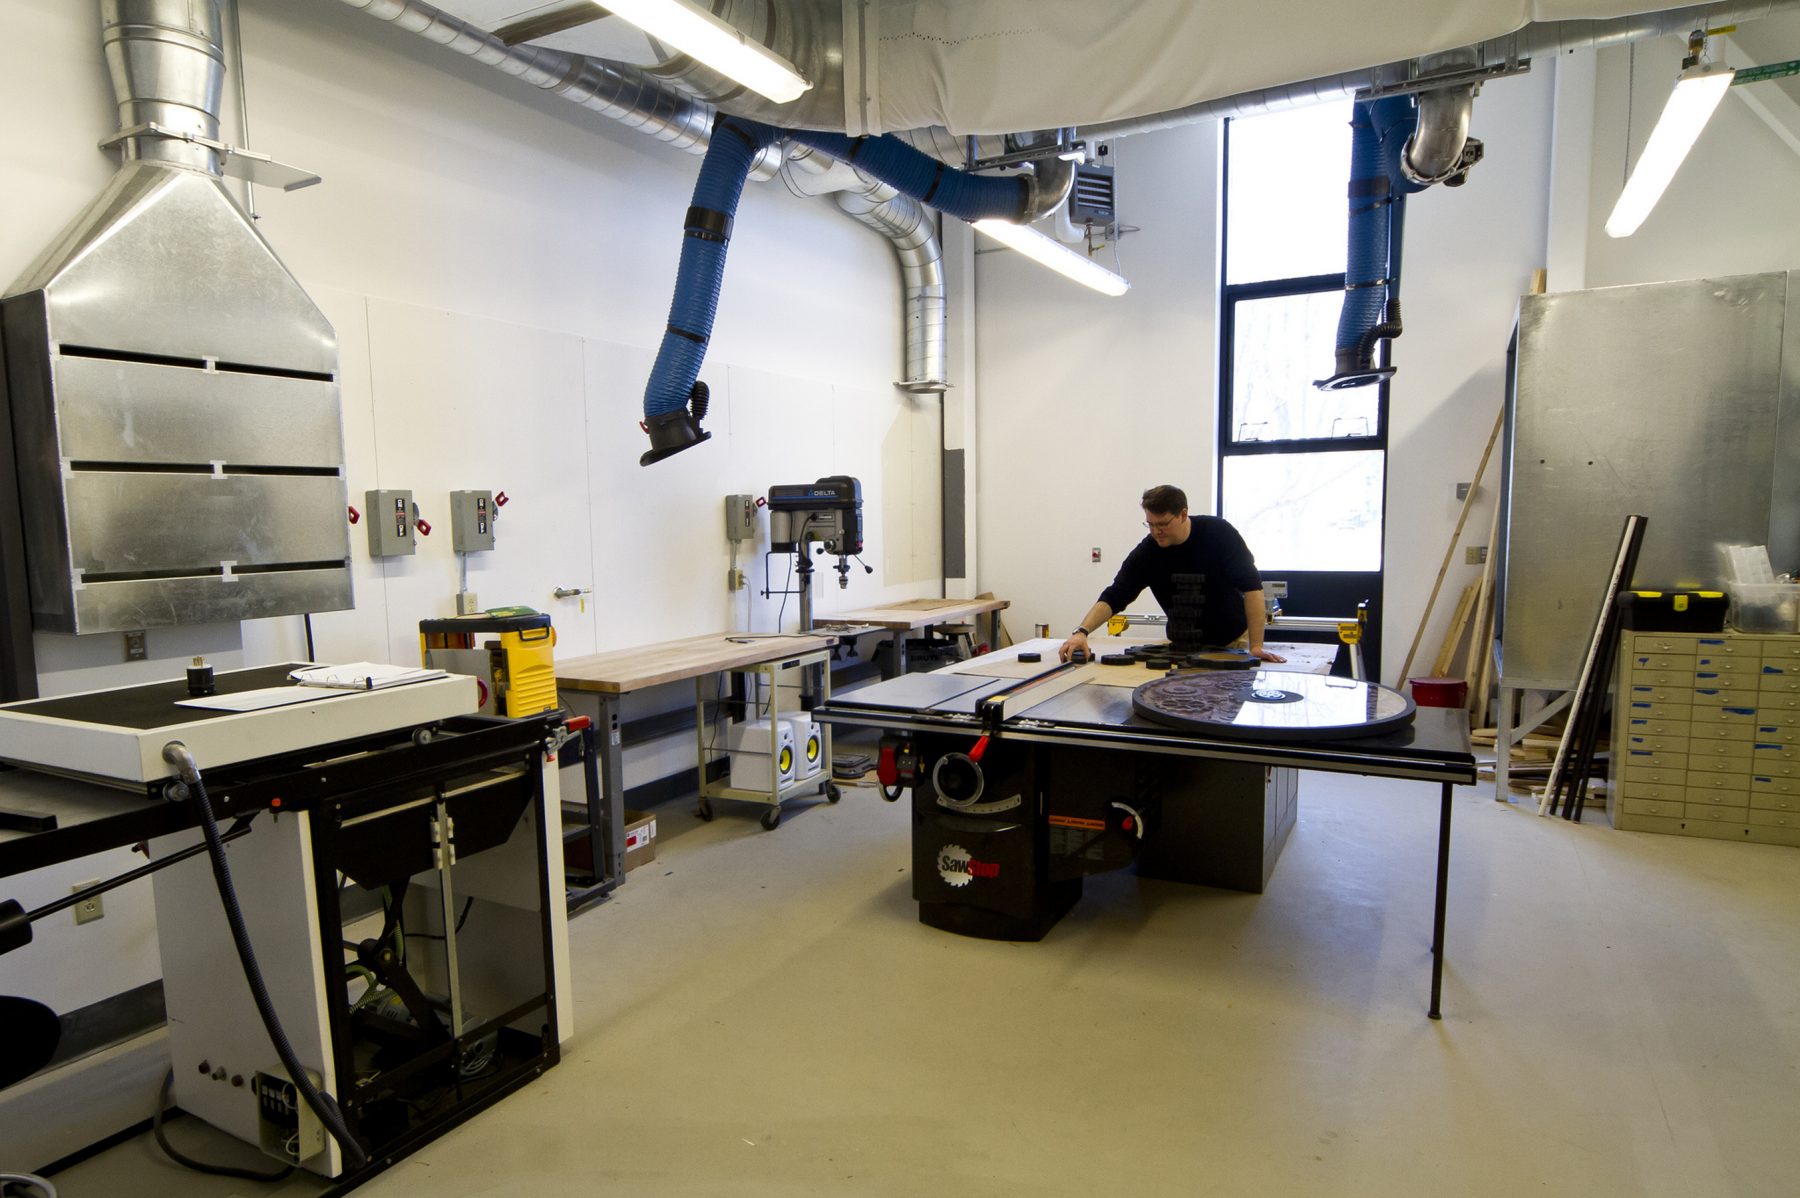 Umaine Wyeth Art Center makers space /workshop